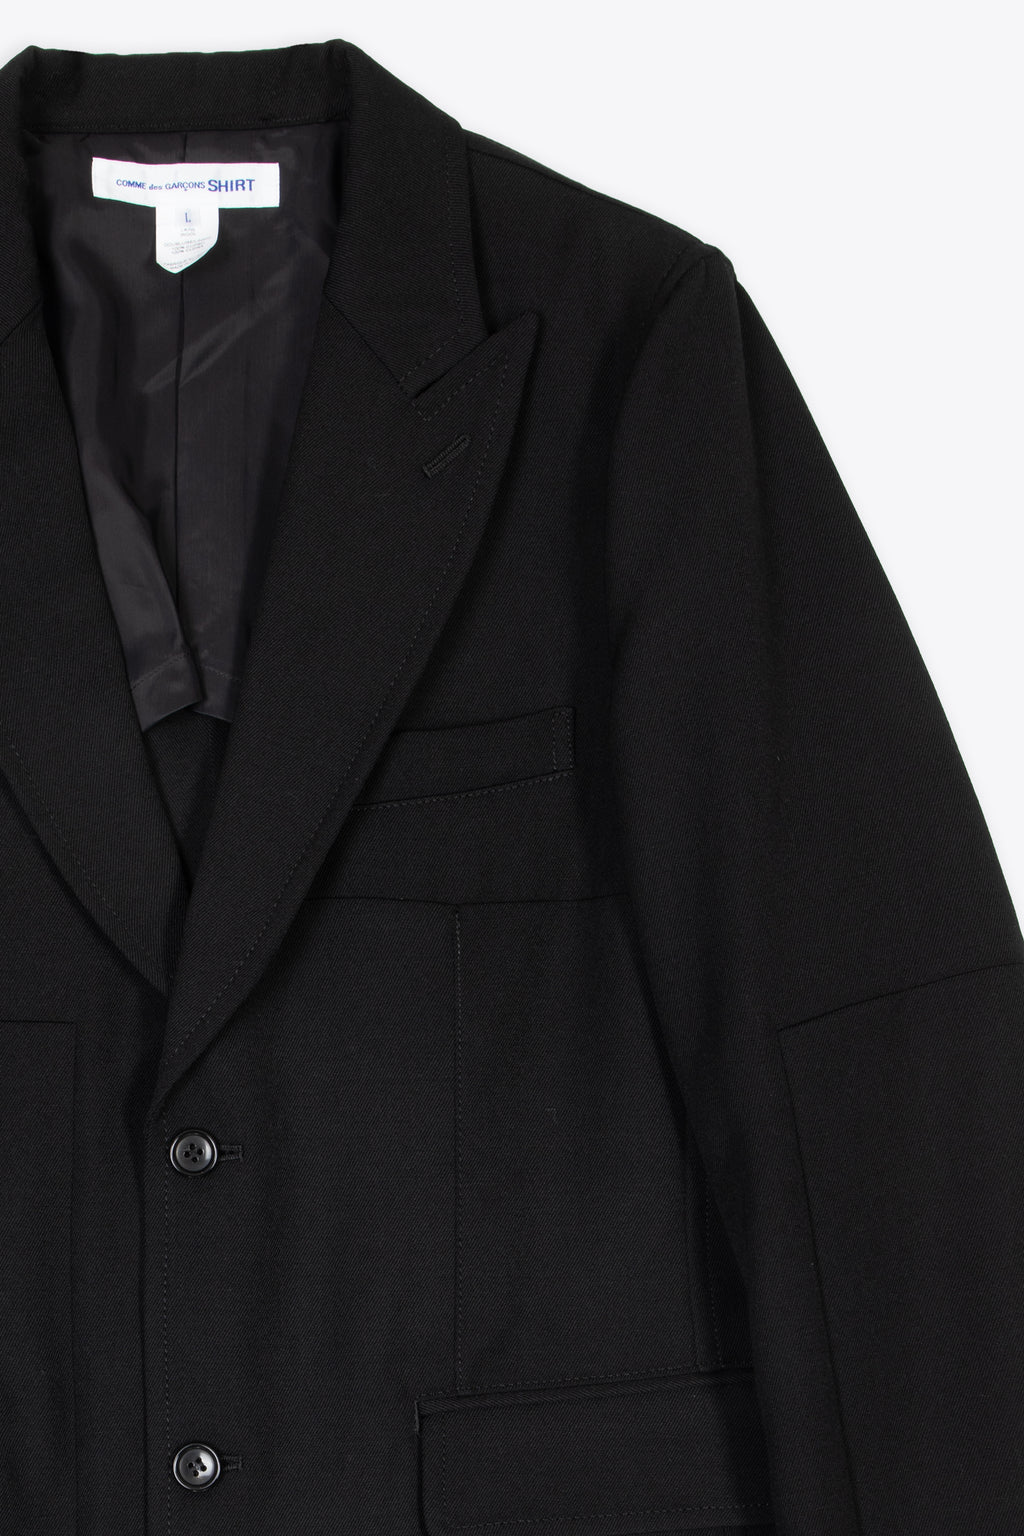 alt-image__Black-wool-patchwork-blazer-with-peak-lapel